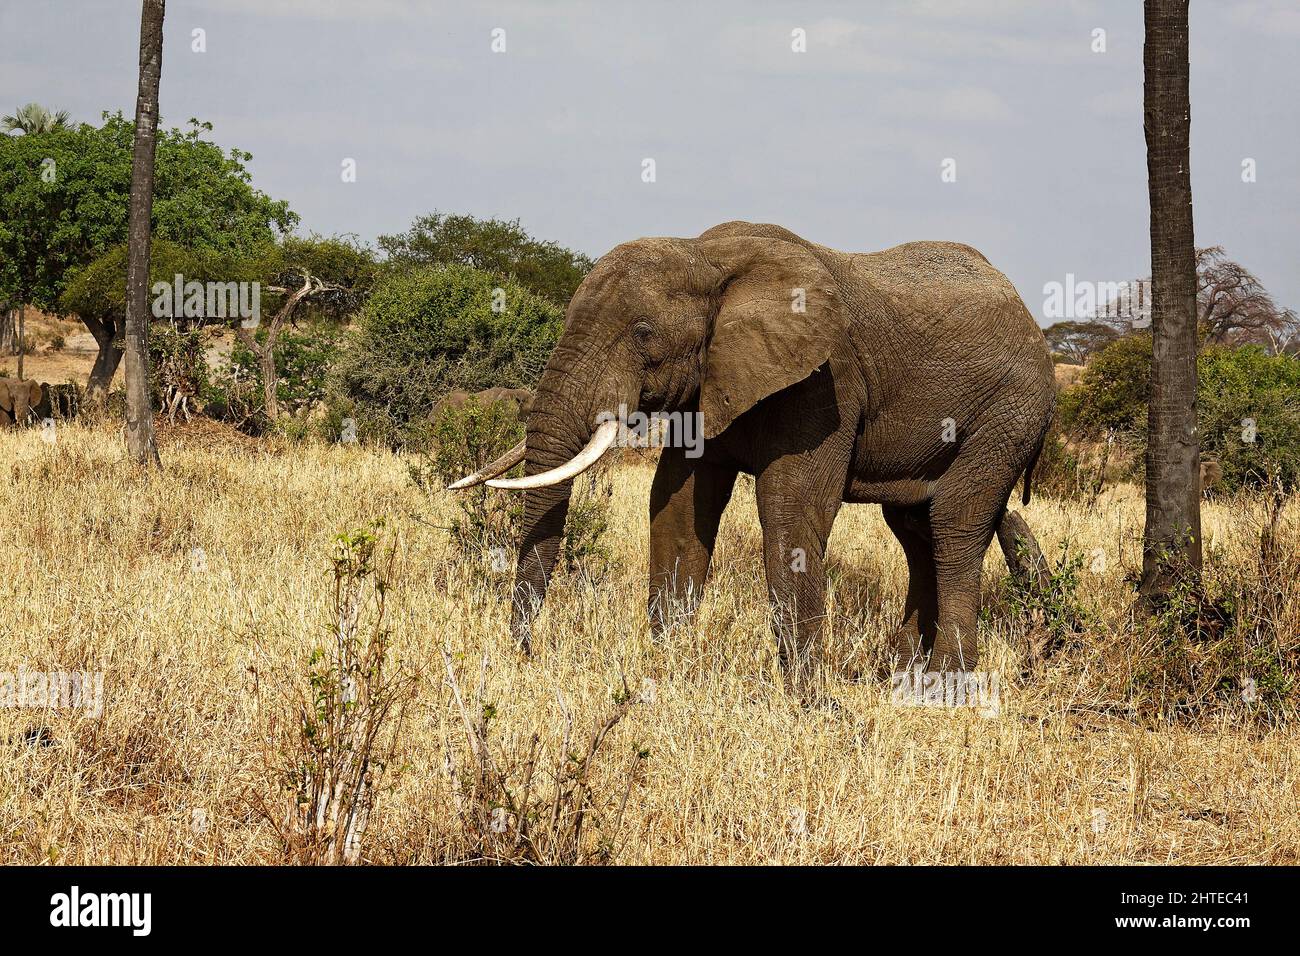 African elephant, portrait, full view, Loxodanta africana, herbivores, largest land mammal, muscular trunk, tusks, large ears, wildlife, animal,  Tara Stock Photo